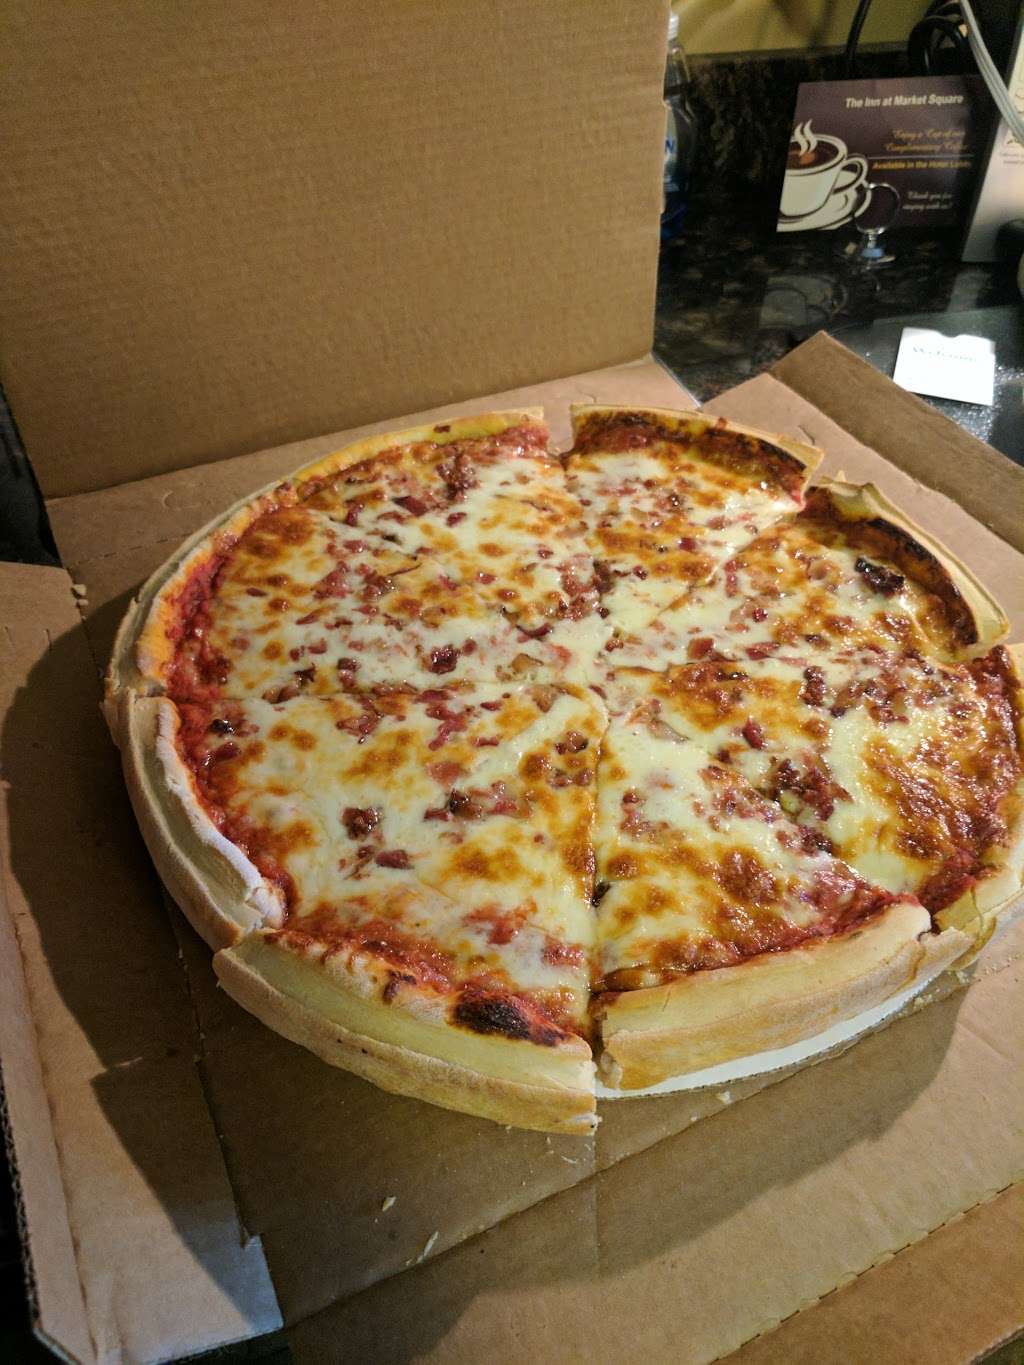 Roma Pizza & Pasta | 801 Sheridan Rd, Winthrop Harbor, IL 60096, USA | Phone: (847) 872-8888